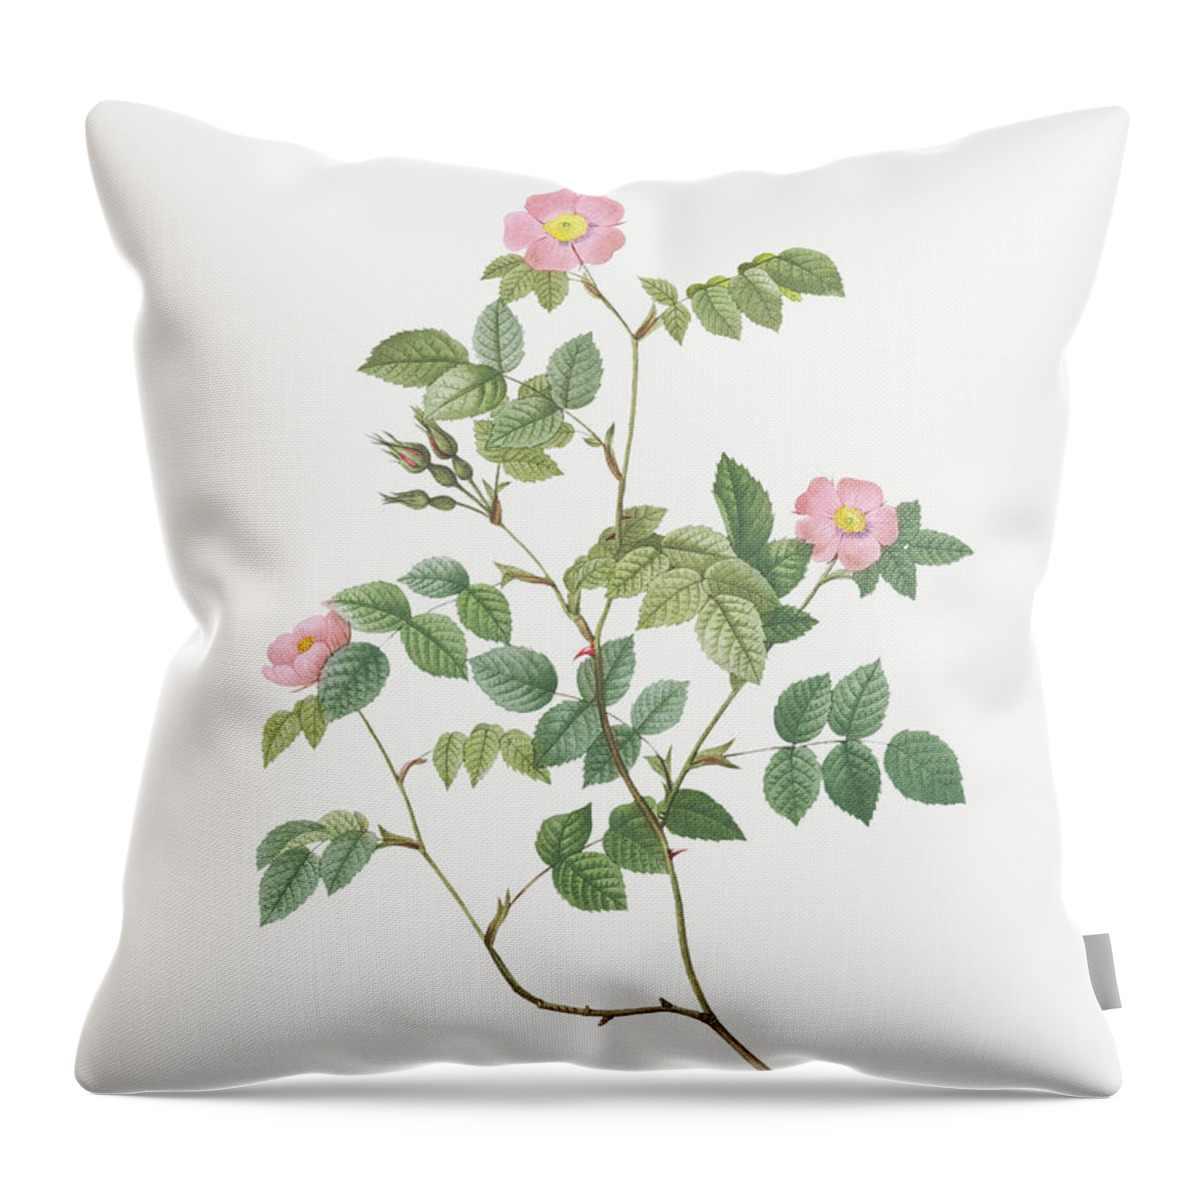 Pink Throw Pillow featuring the painting Eglantine, Wild Rosehips, Rosa rubiginosa nemoralis by Pierre Joseph Redoute